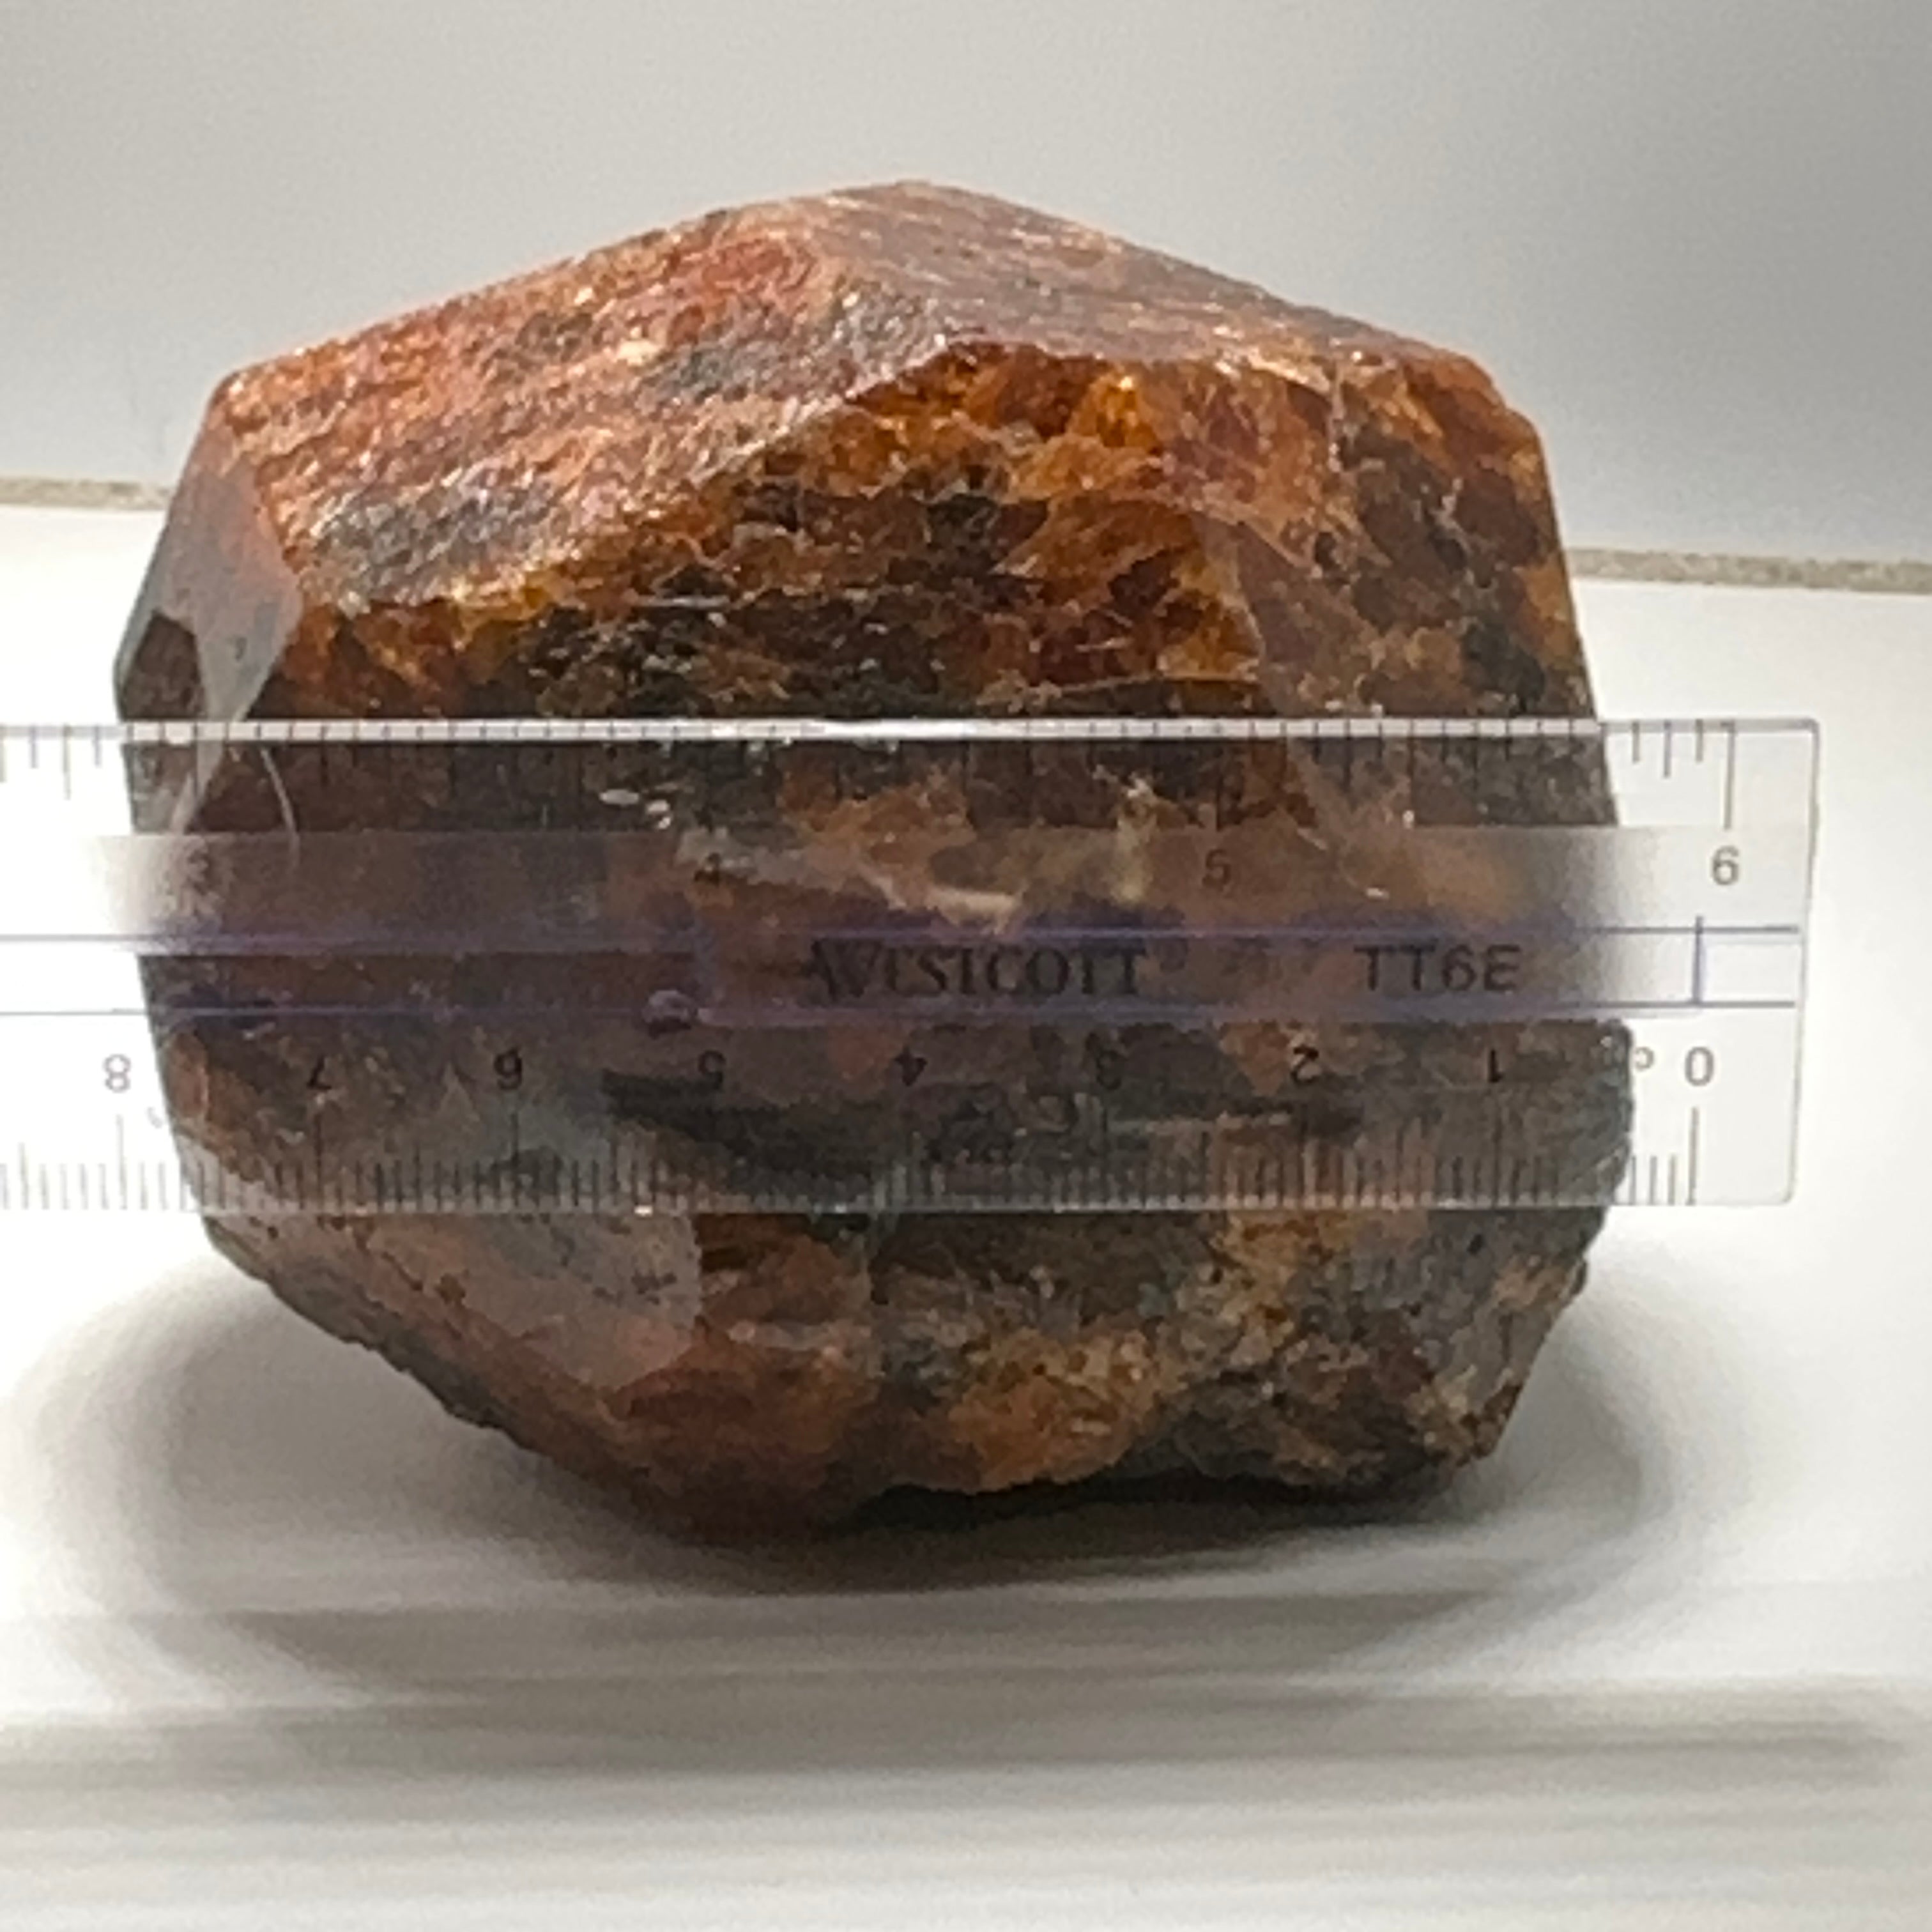 797gm (3985ct) Mandarin Spessartite Garnet Crystal, Loliondo, Tanzania. 87 x 67 x 64mm. Untreated Unheated